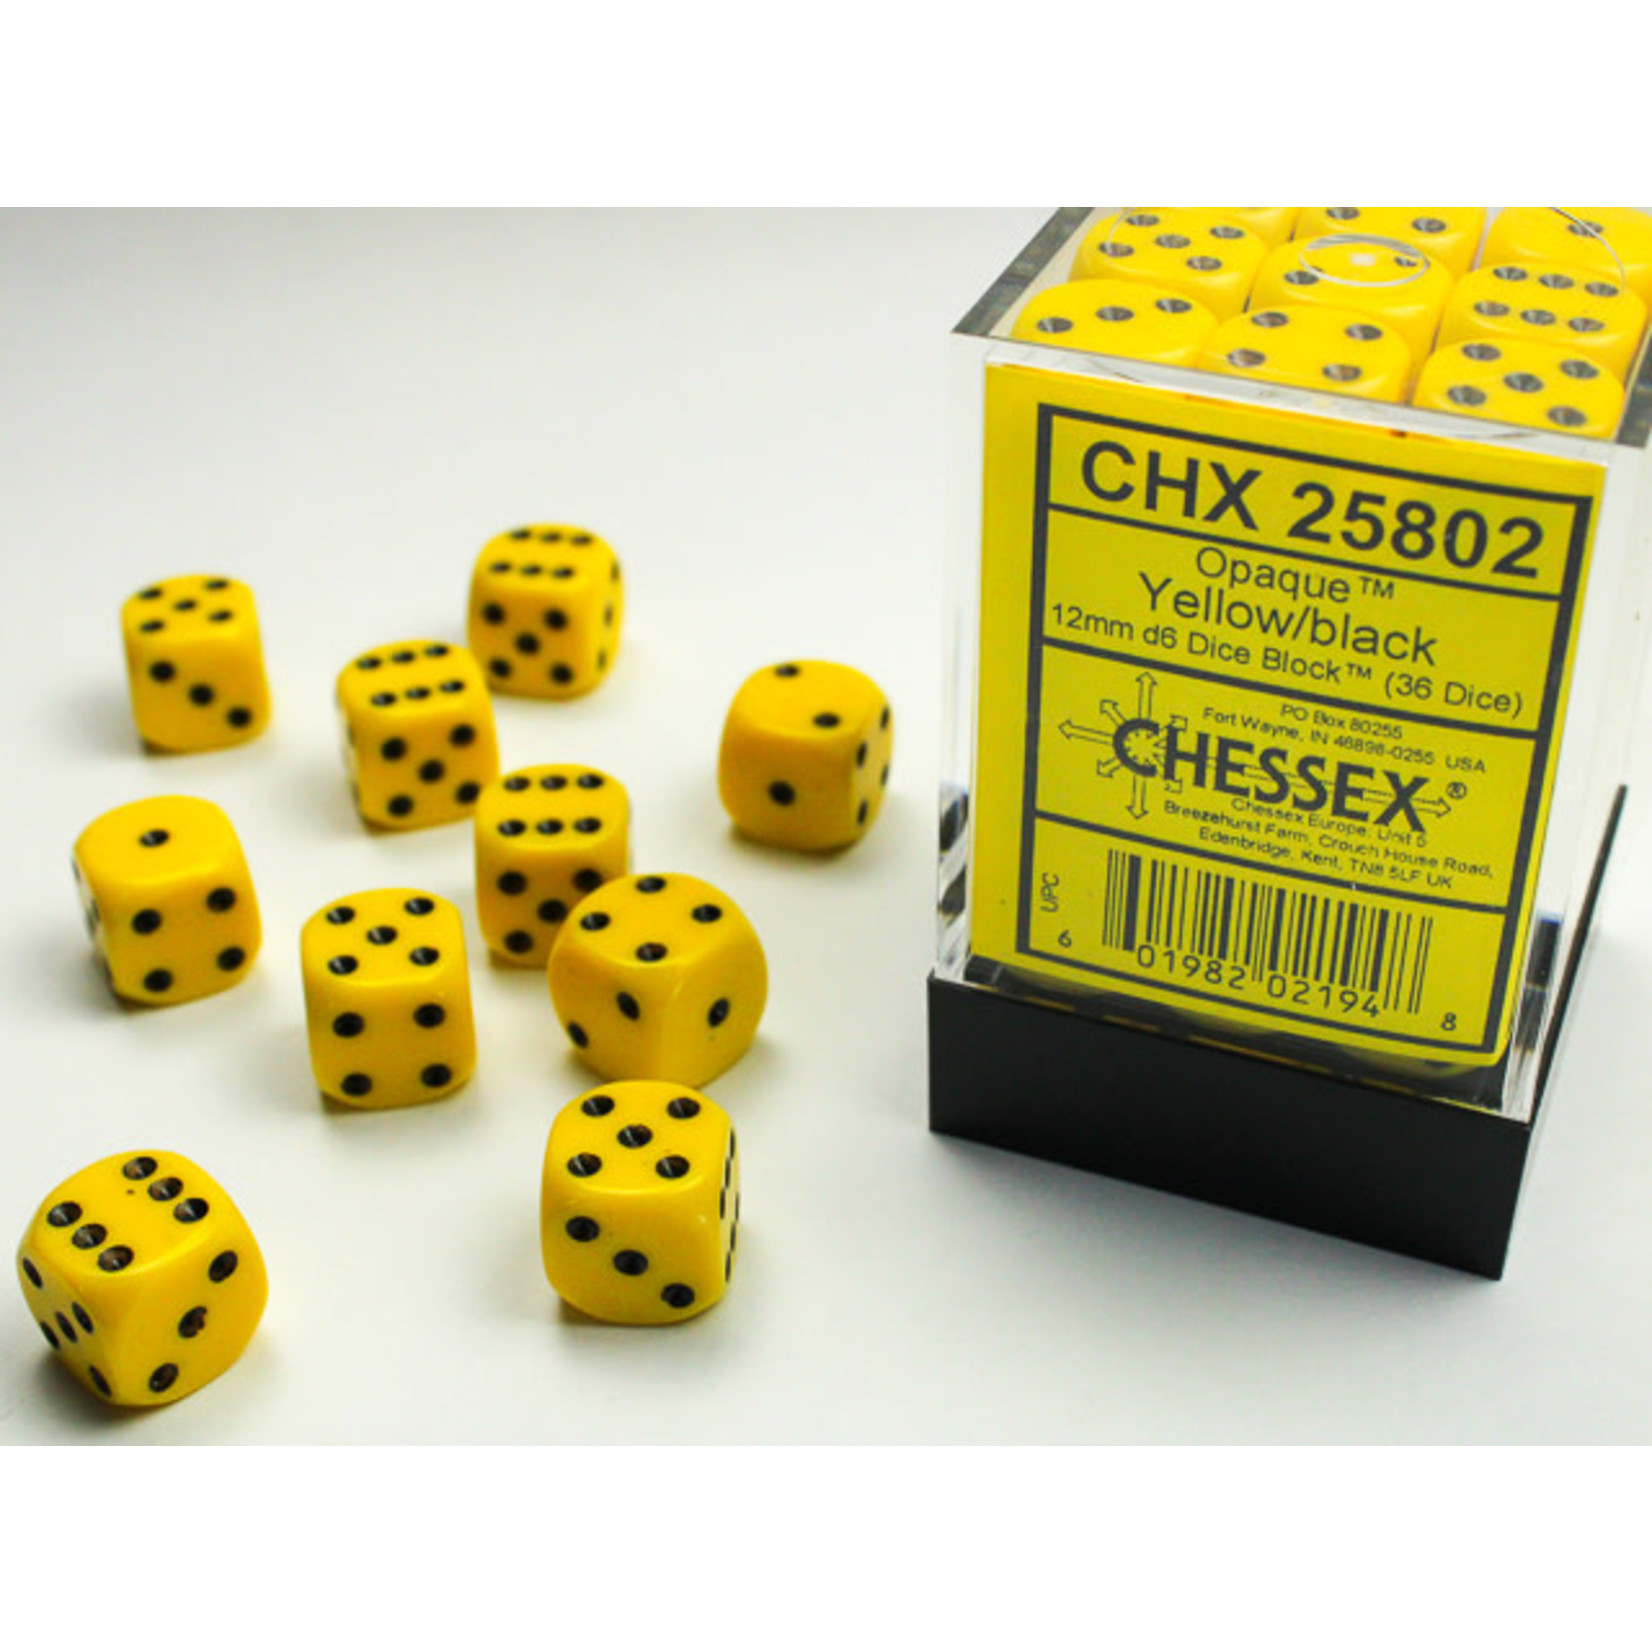 Chessex 25802 Opaque 36pc Yellow/Black Dice